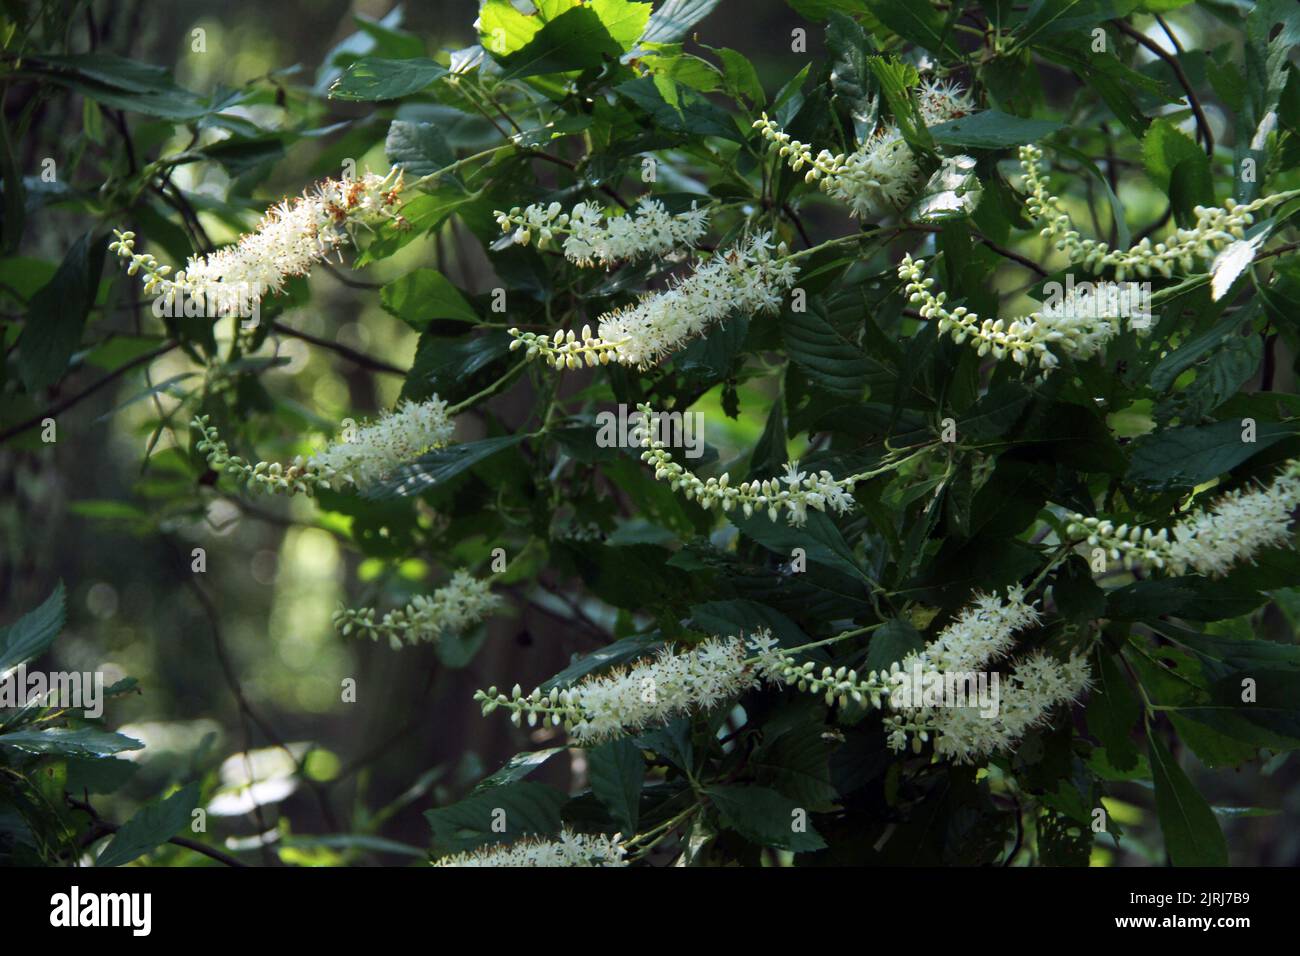 Clethra alnifolia (Coastal sweetpepperbush) shrub in bloom Stock Photo